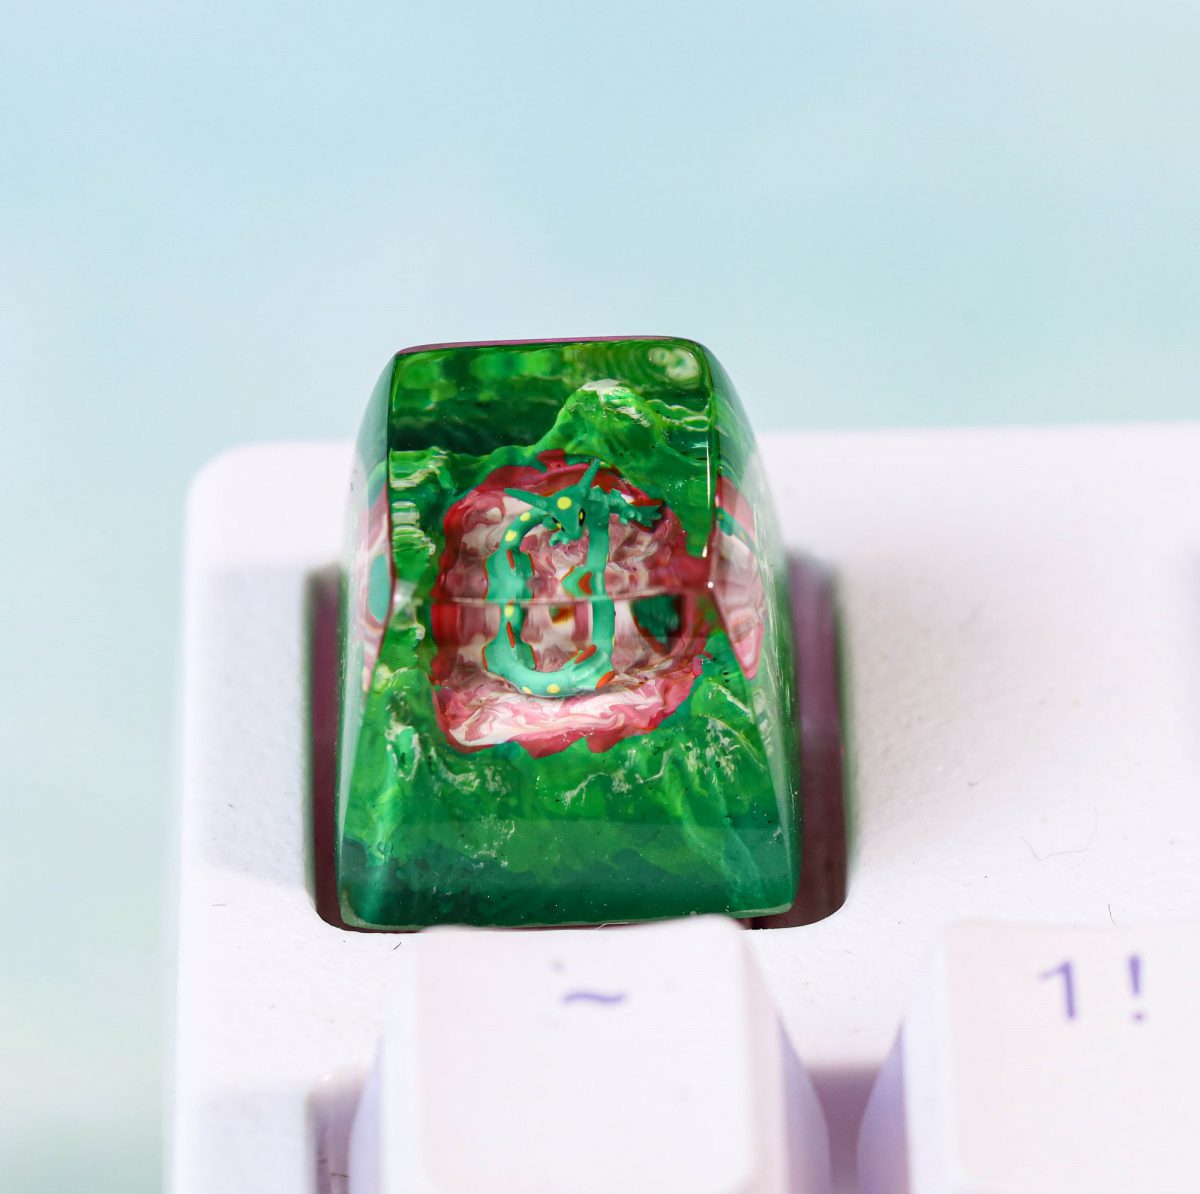 Rayquaza Artisan Keycap - A dark green keycap